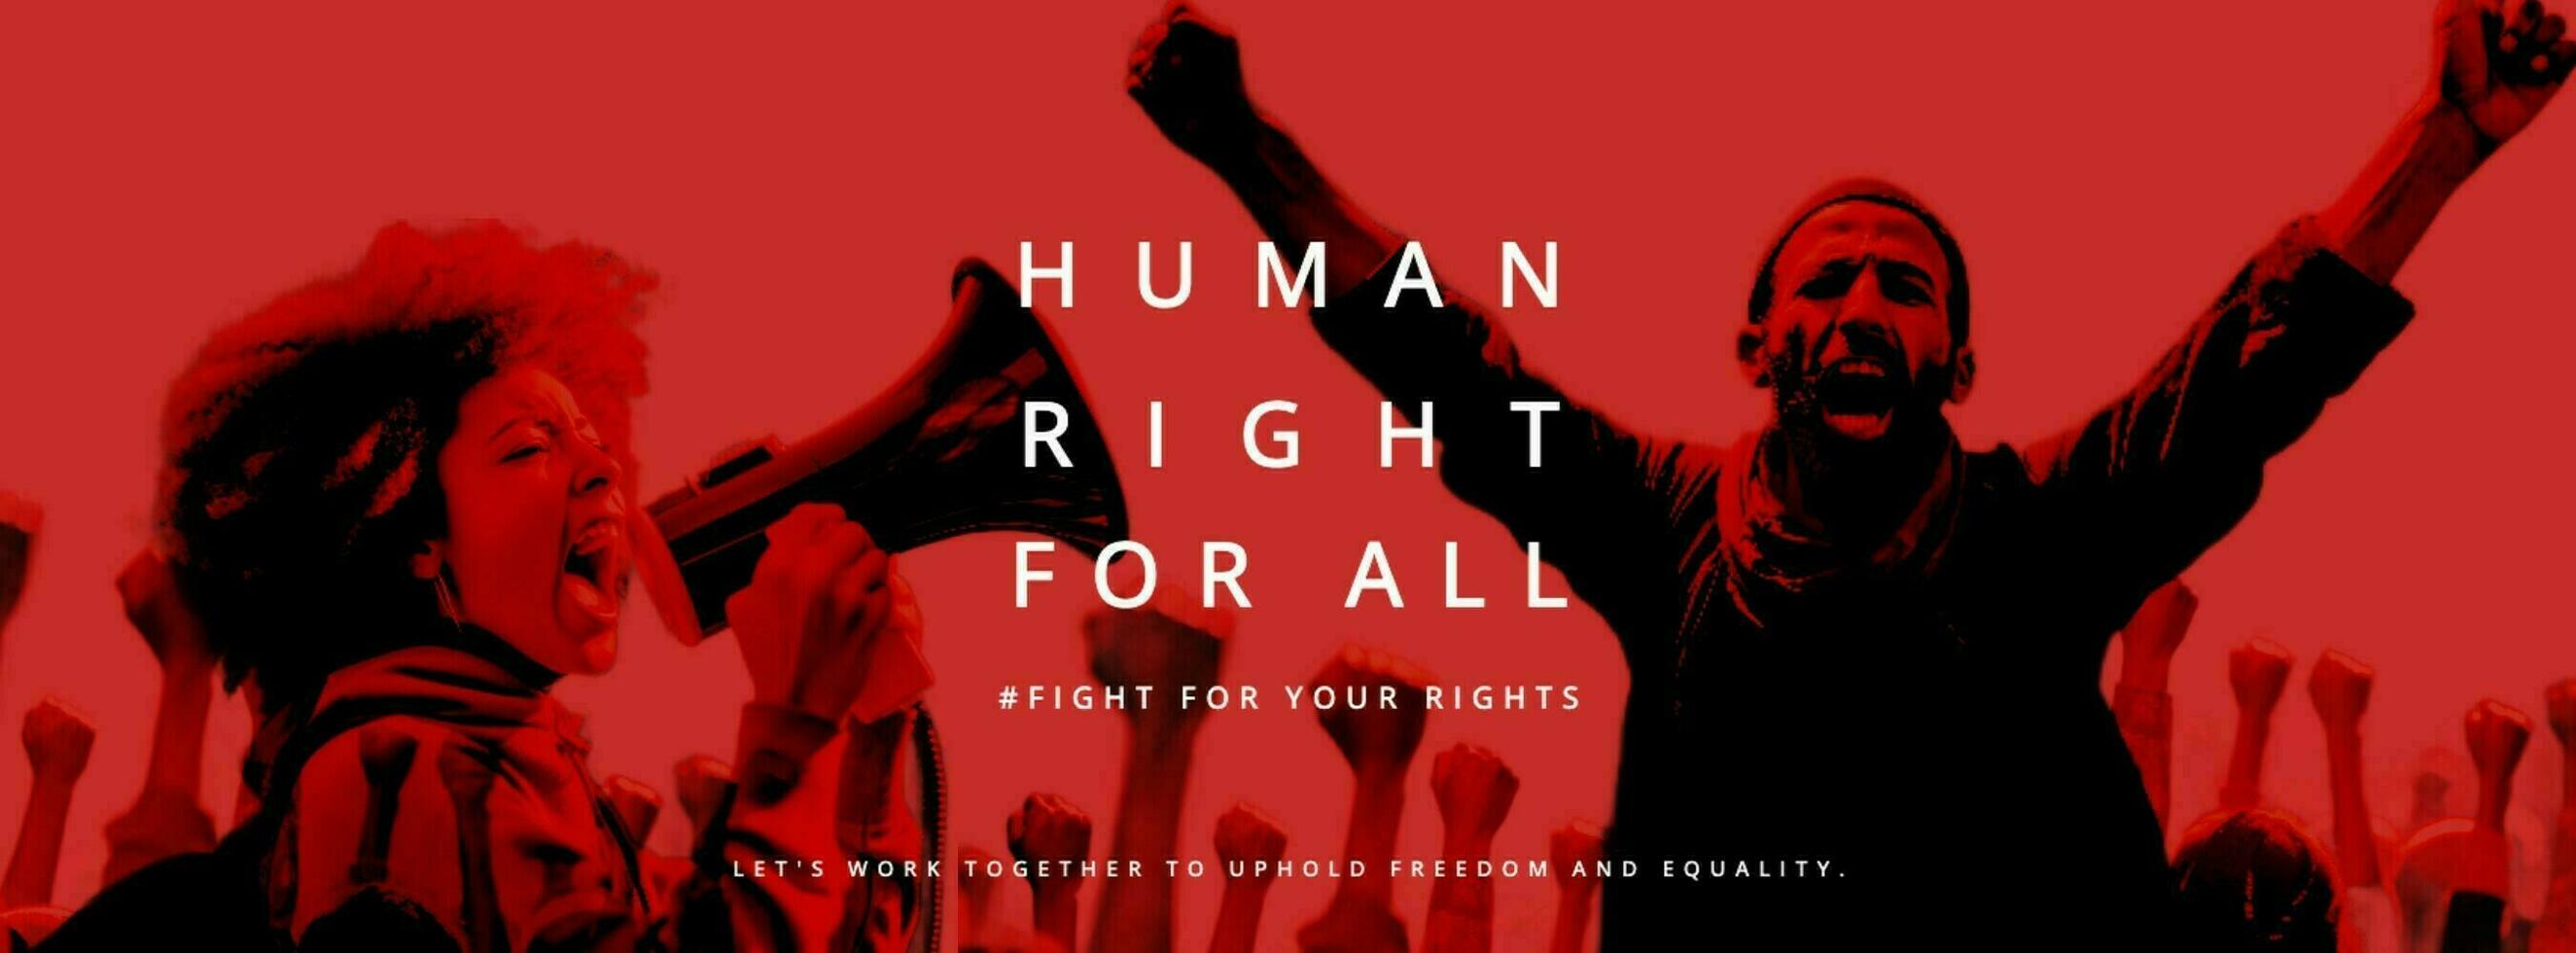 human rights social media banner  template